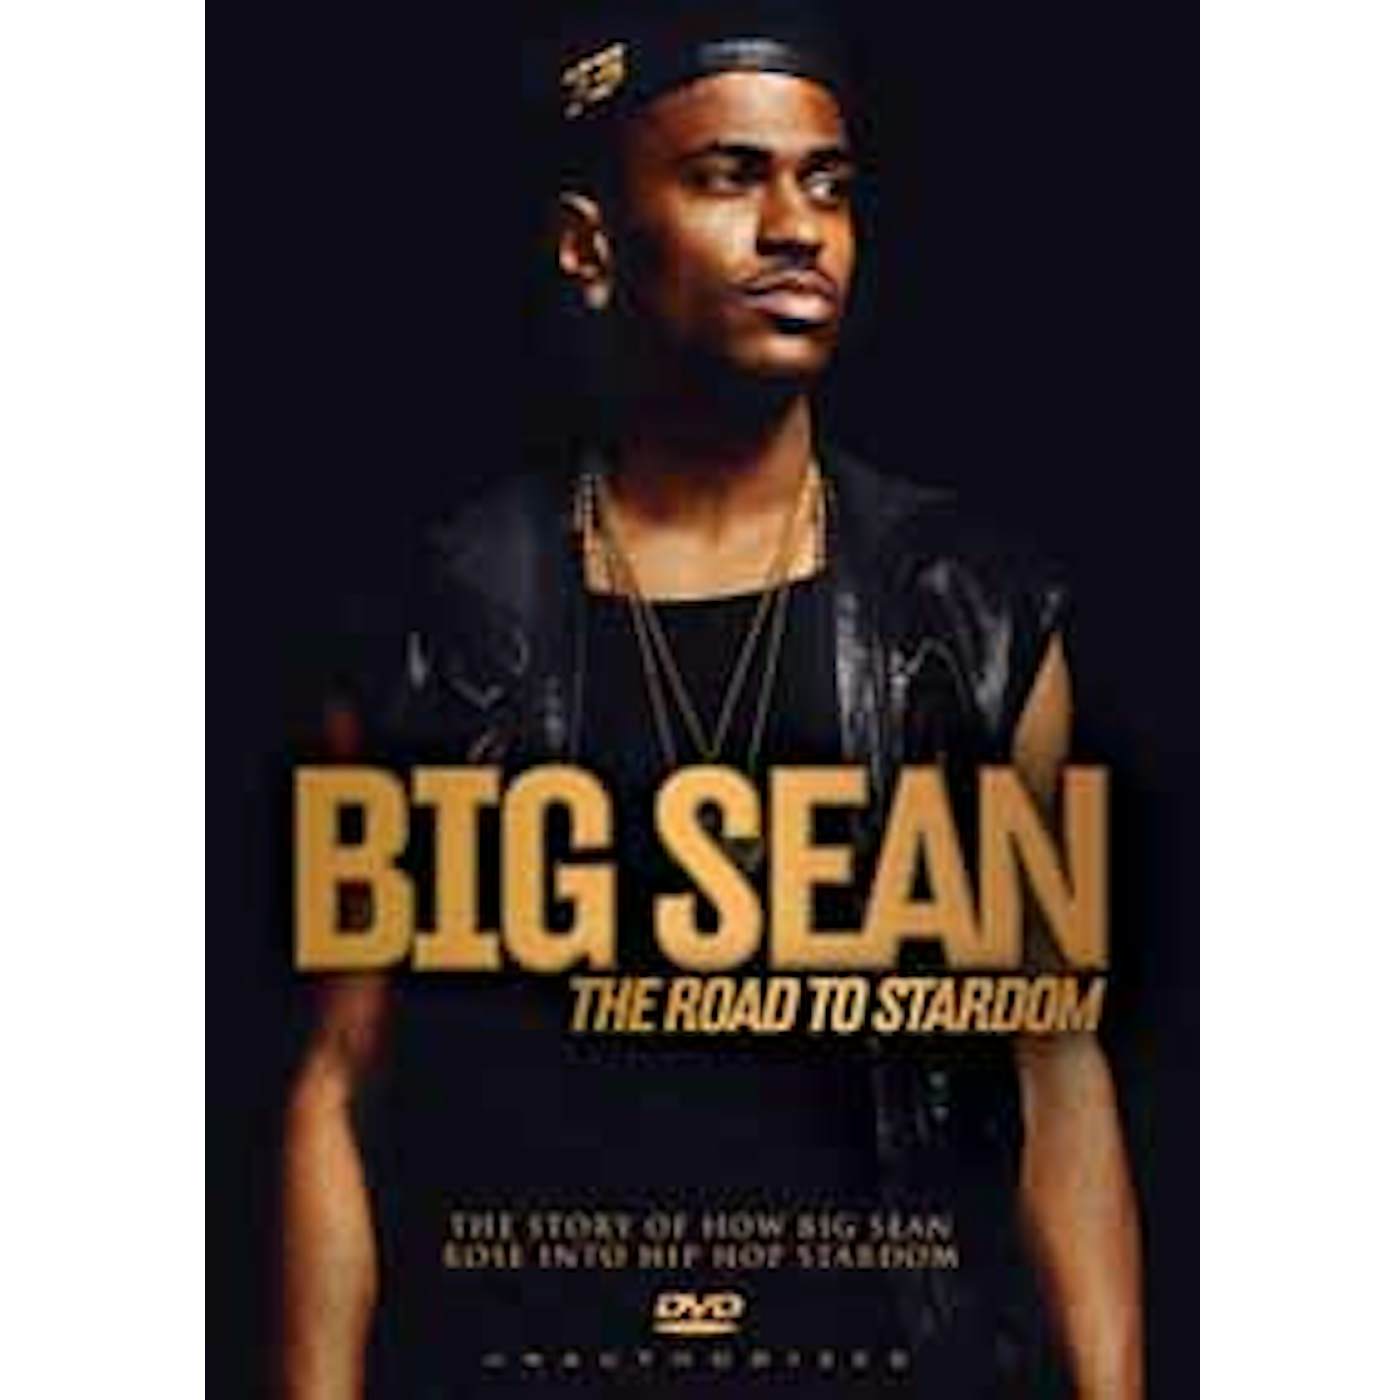 Big Sean DVD - The Road To Stardom